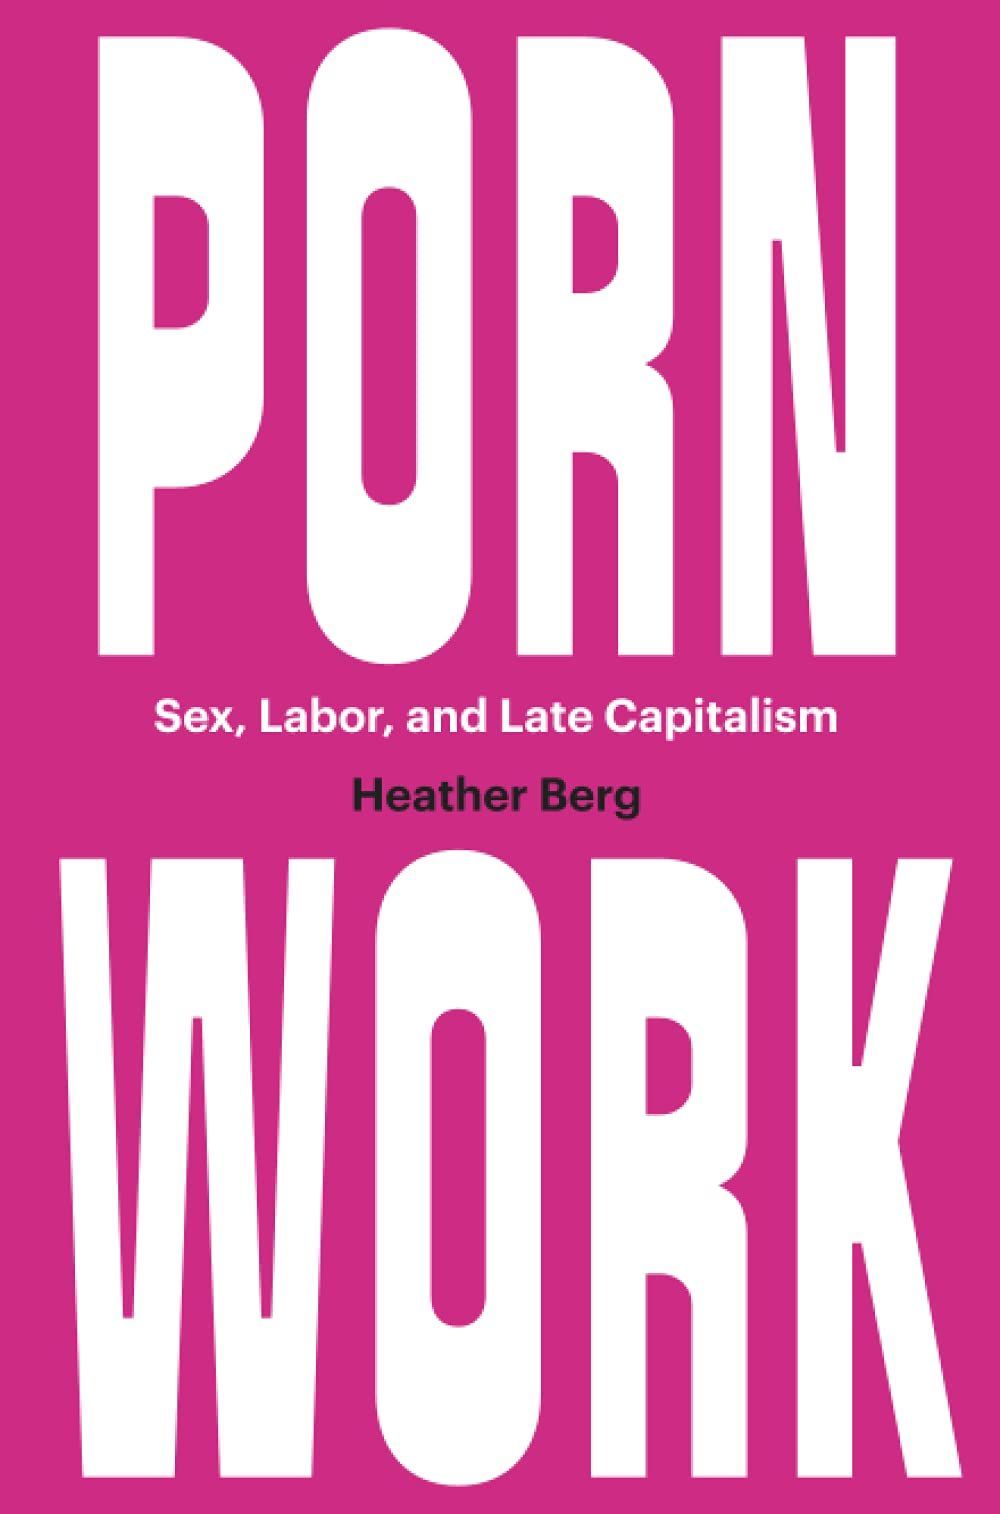 Sex Work as (Anti)Work: On Heather Berg’s “Porn Work”